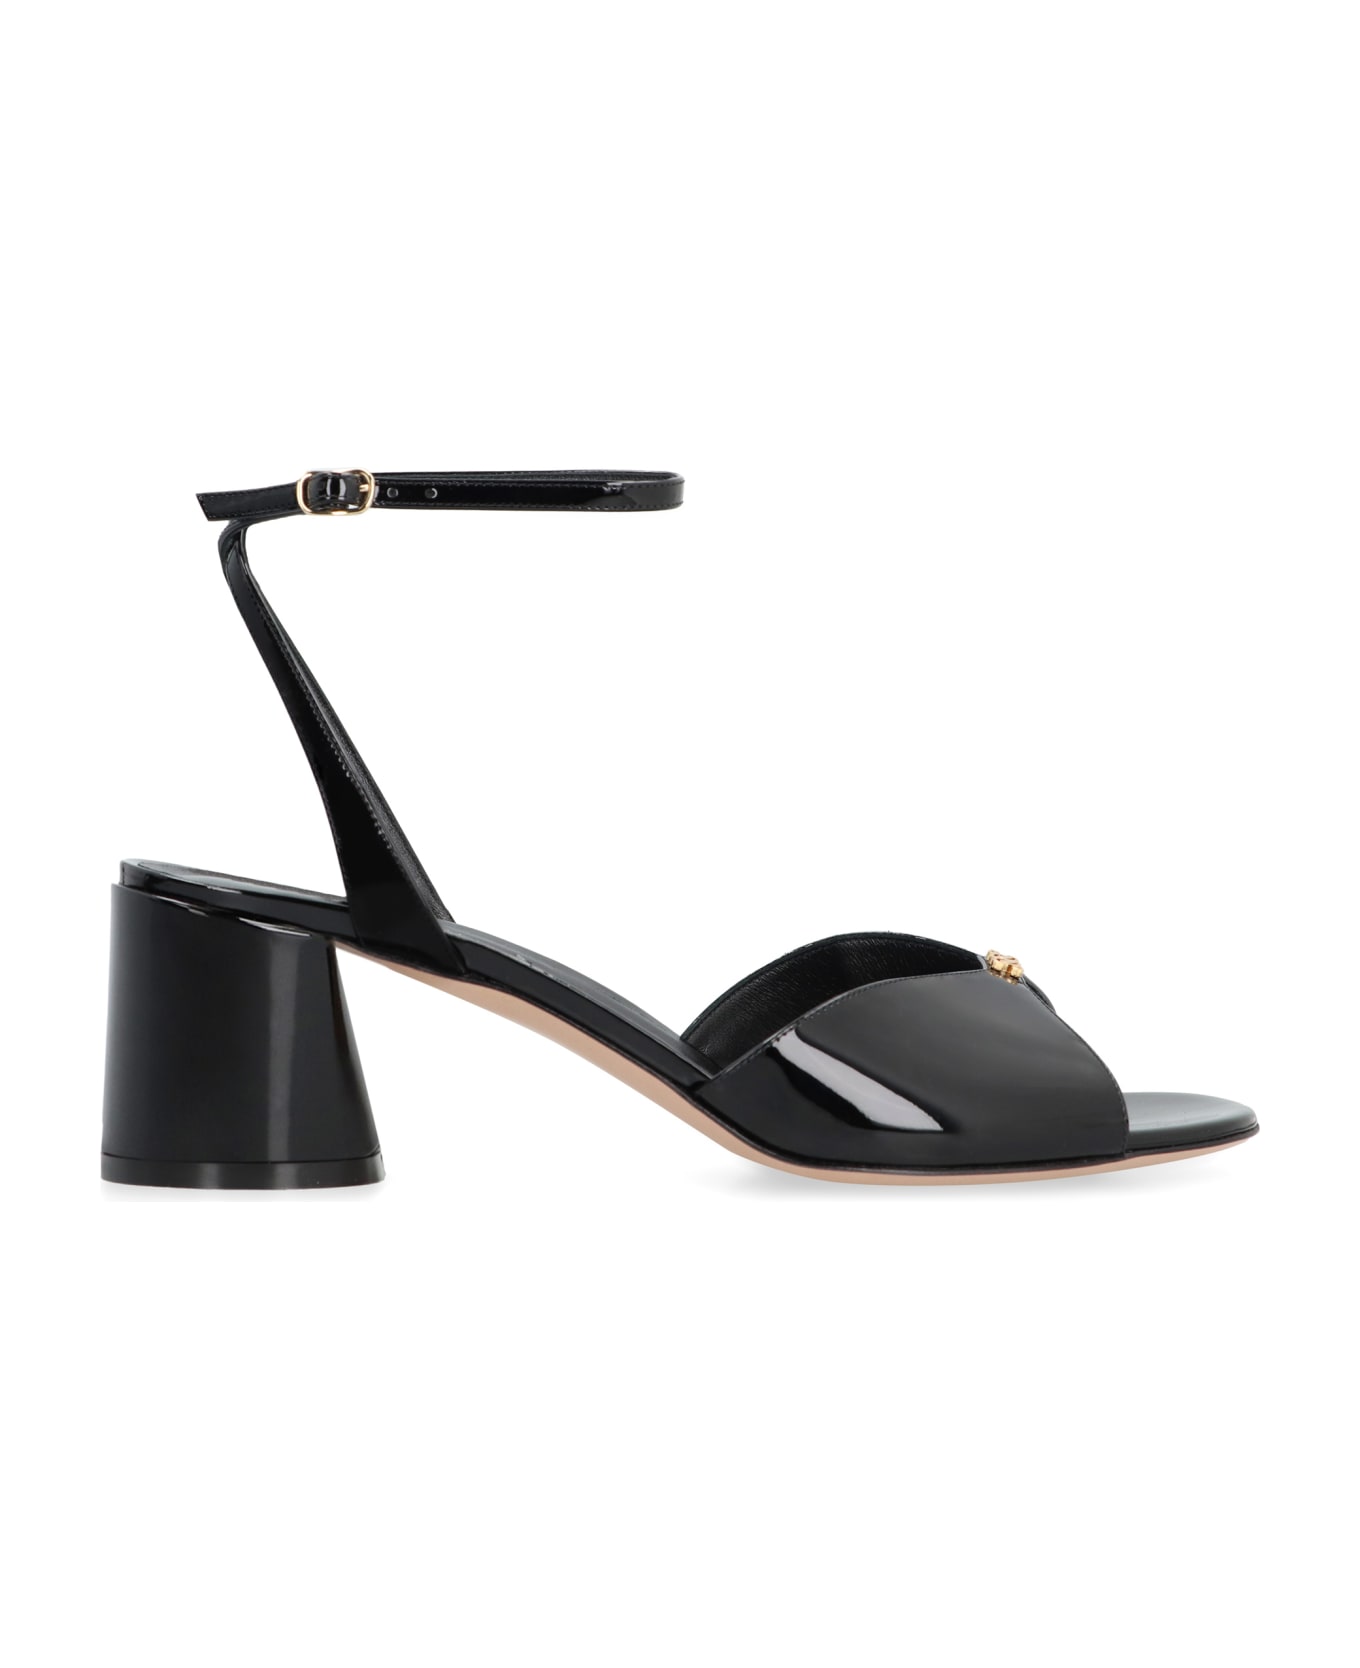 Casadei Tiffany Patent Leather Sandals - black